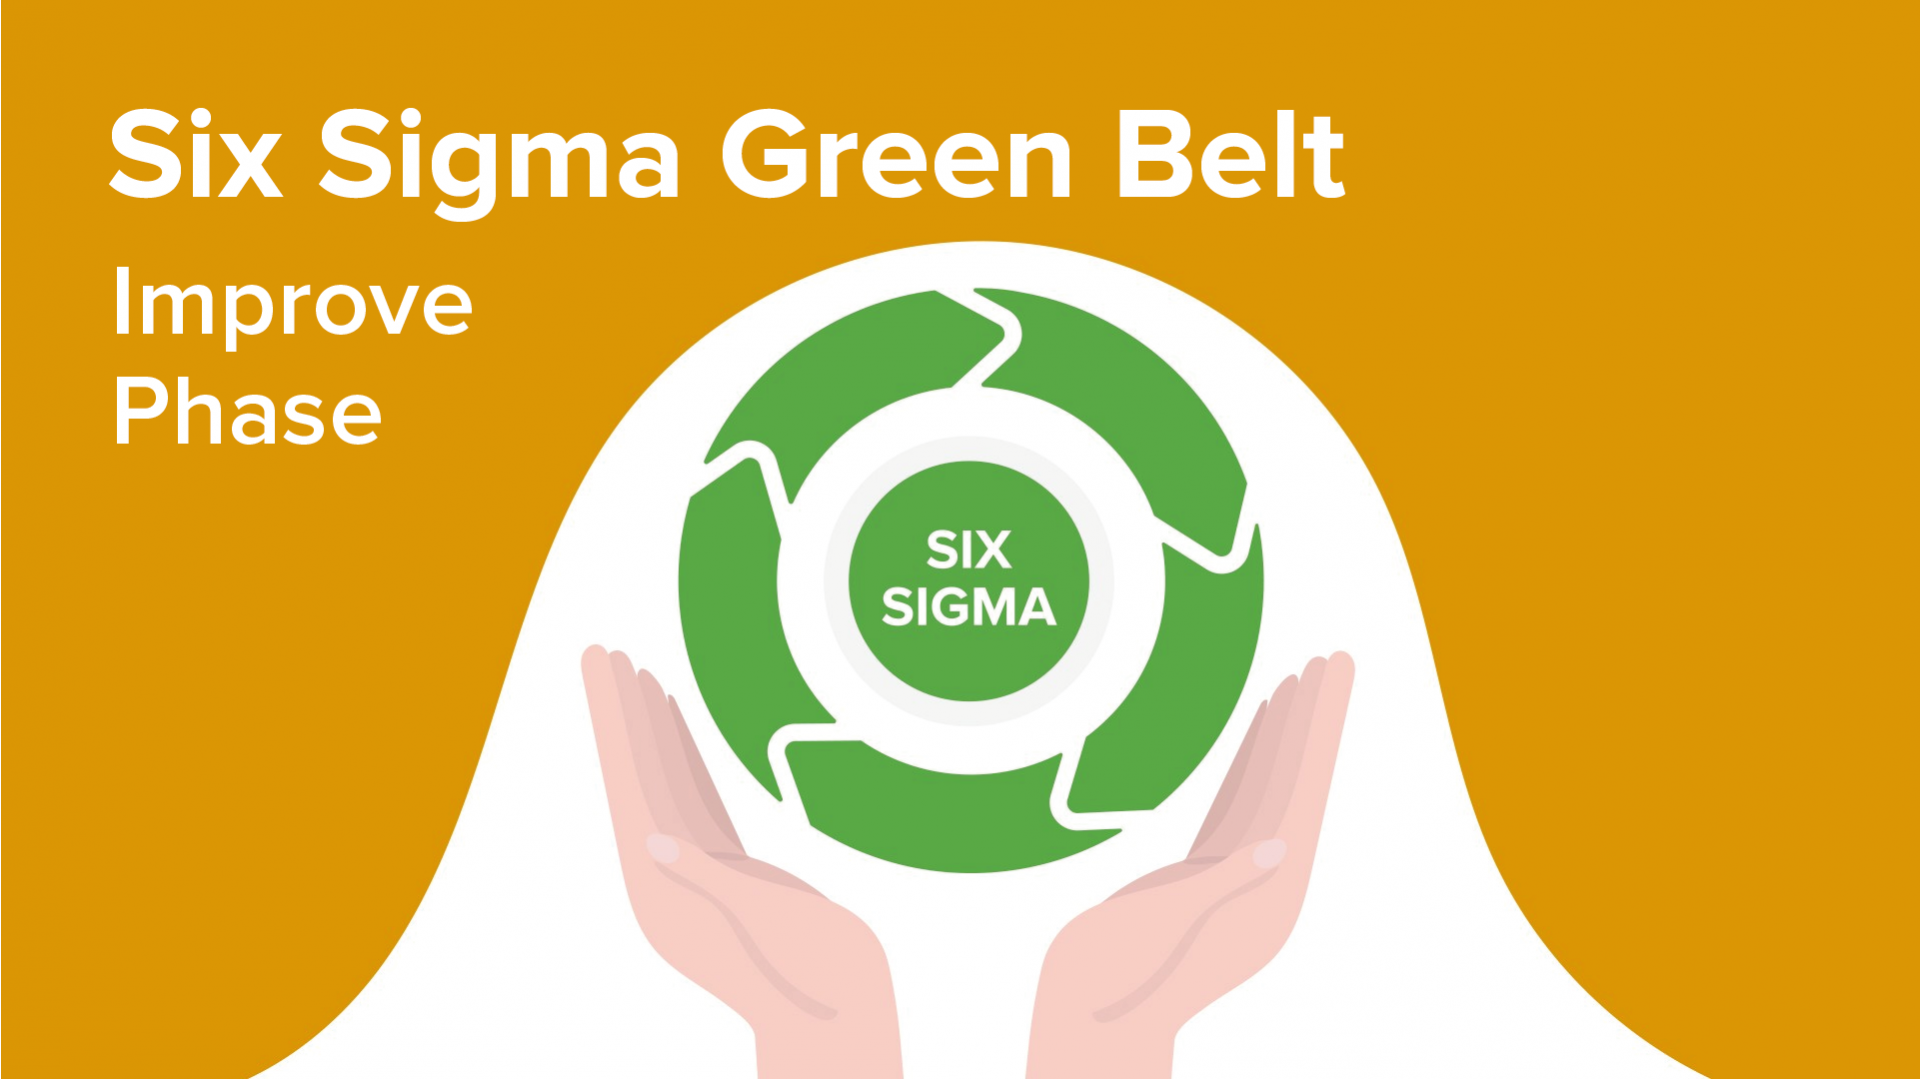 Six Sigma Green Belt Jobs In India